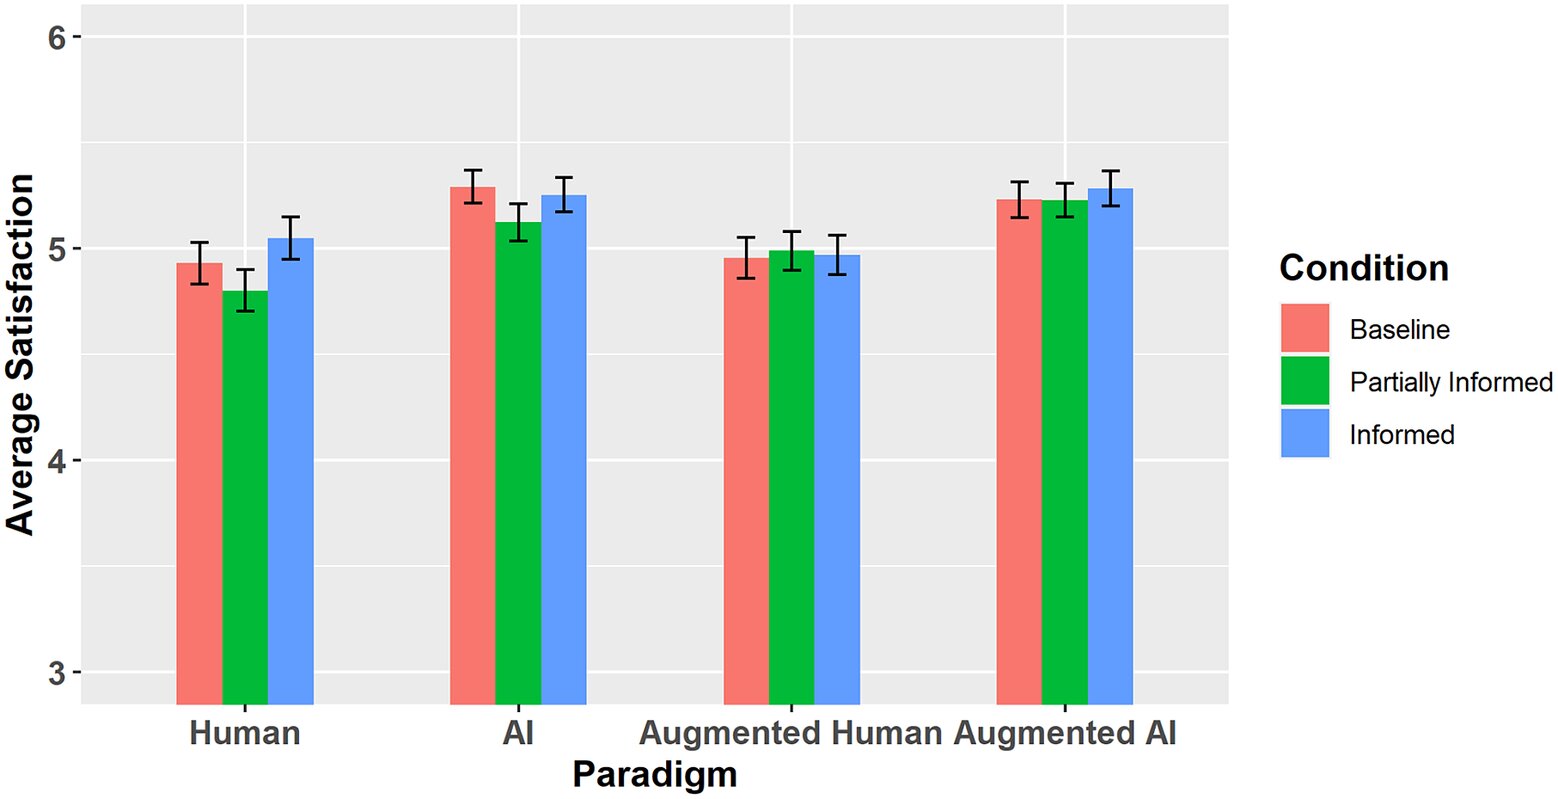 Algorithm appreciation overcomes algorithm aversion, advertising content study finds